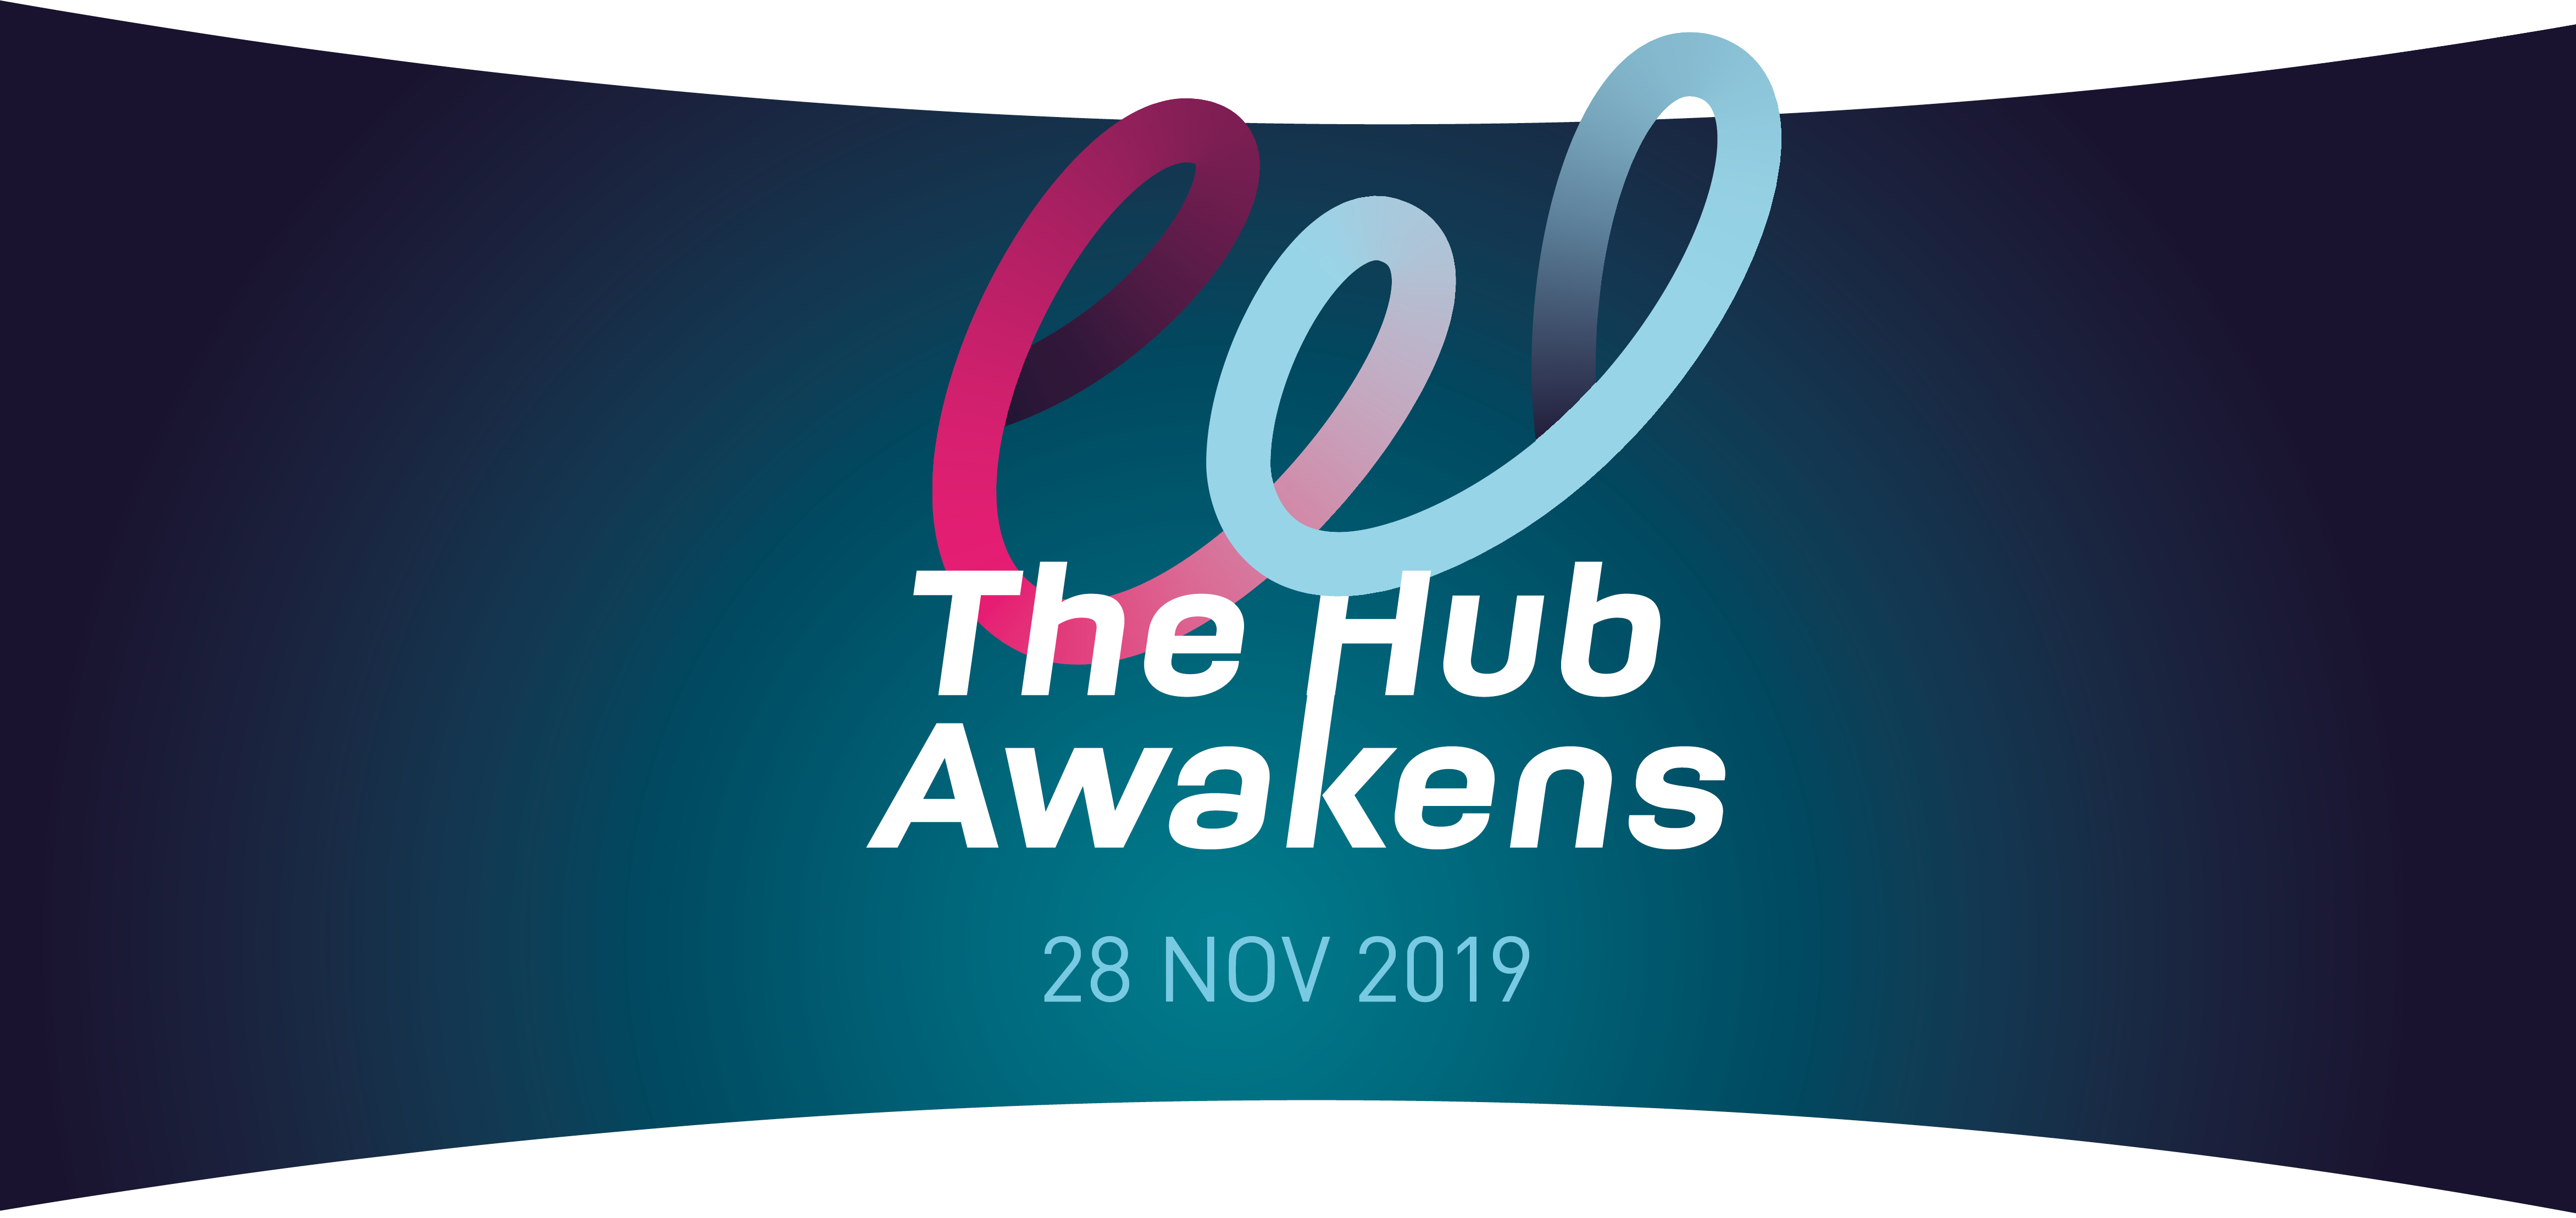 The Hub Awakens - mobile